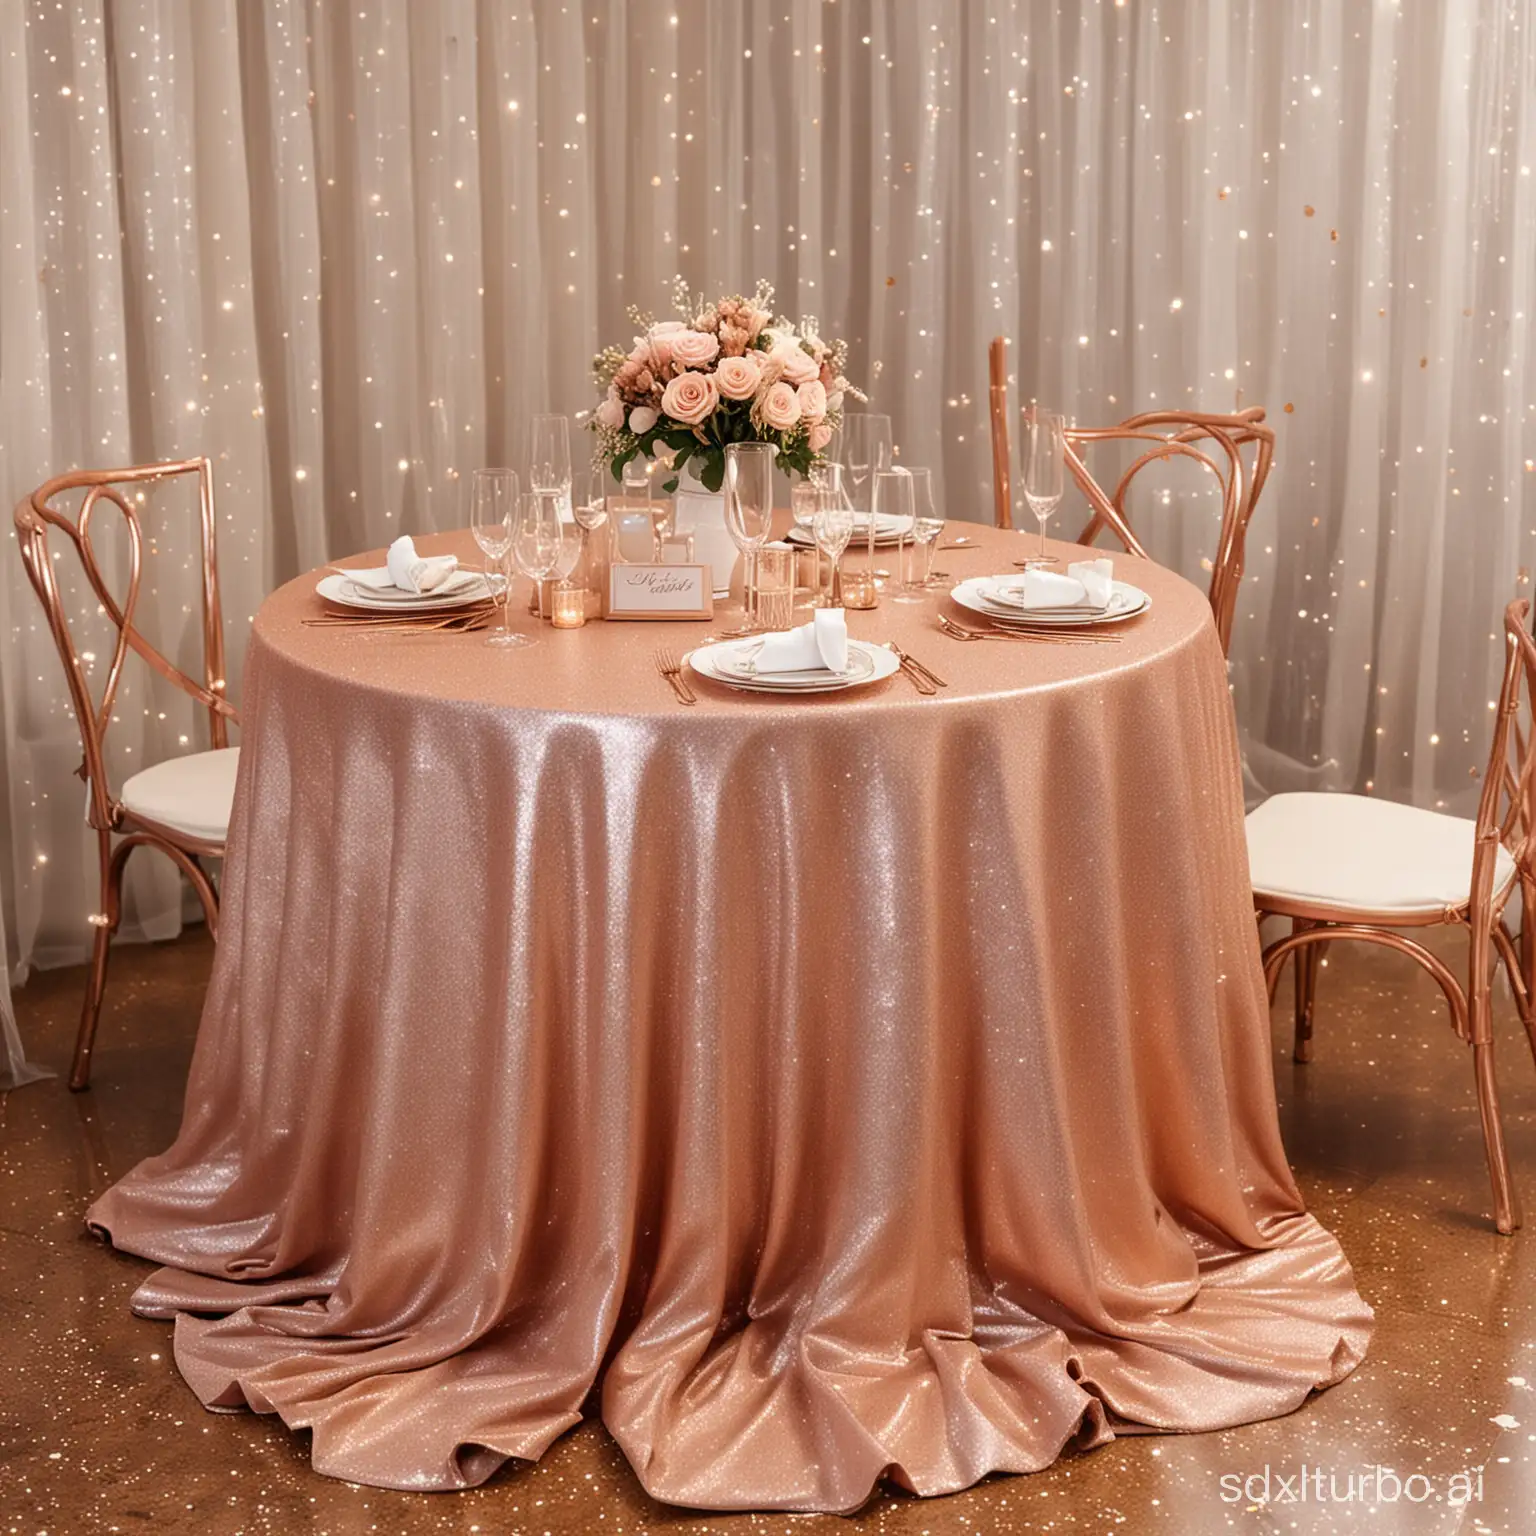 Elegant-Wedding-Reception-Decor-with-Rose-Gold-Glitter-Tablecloths